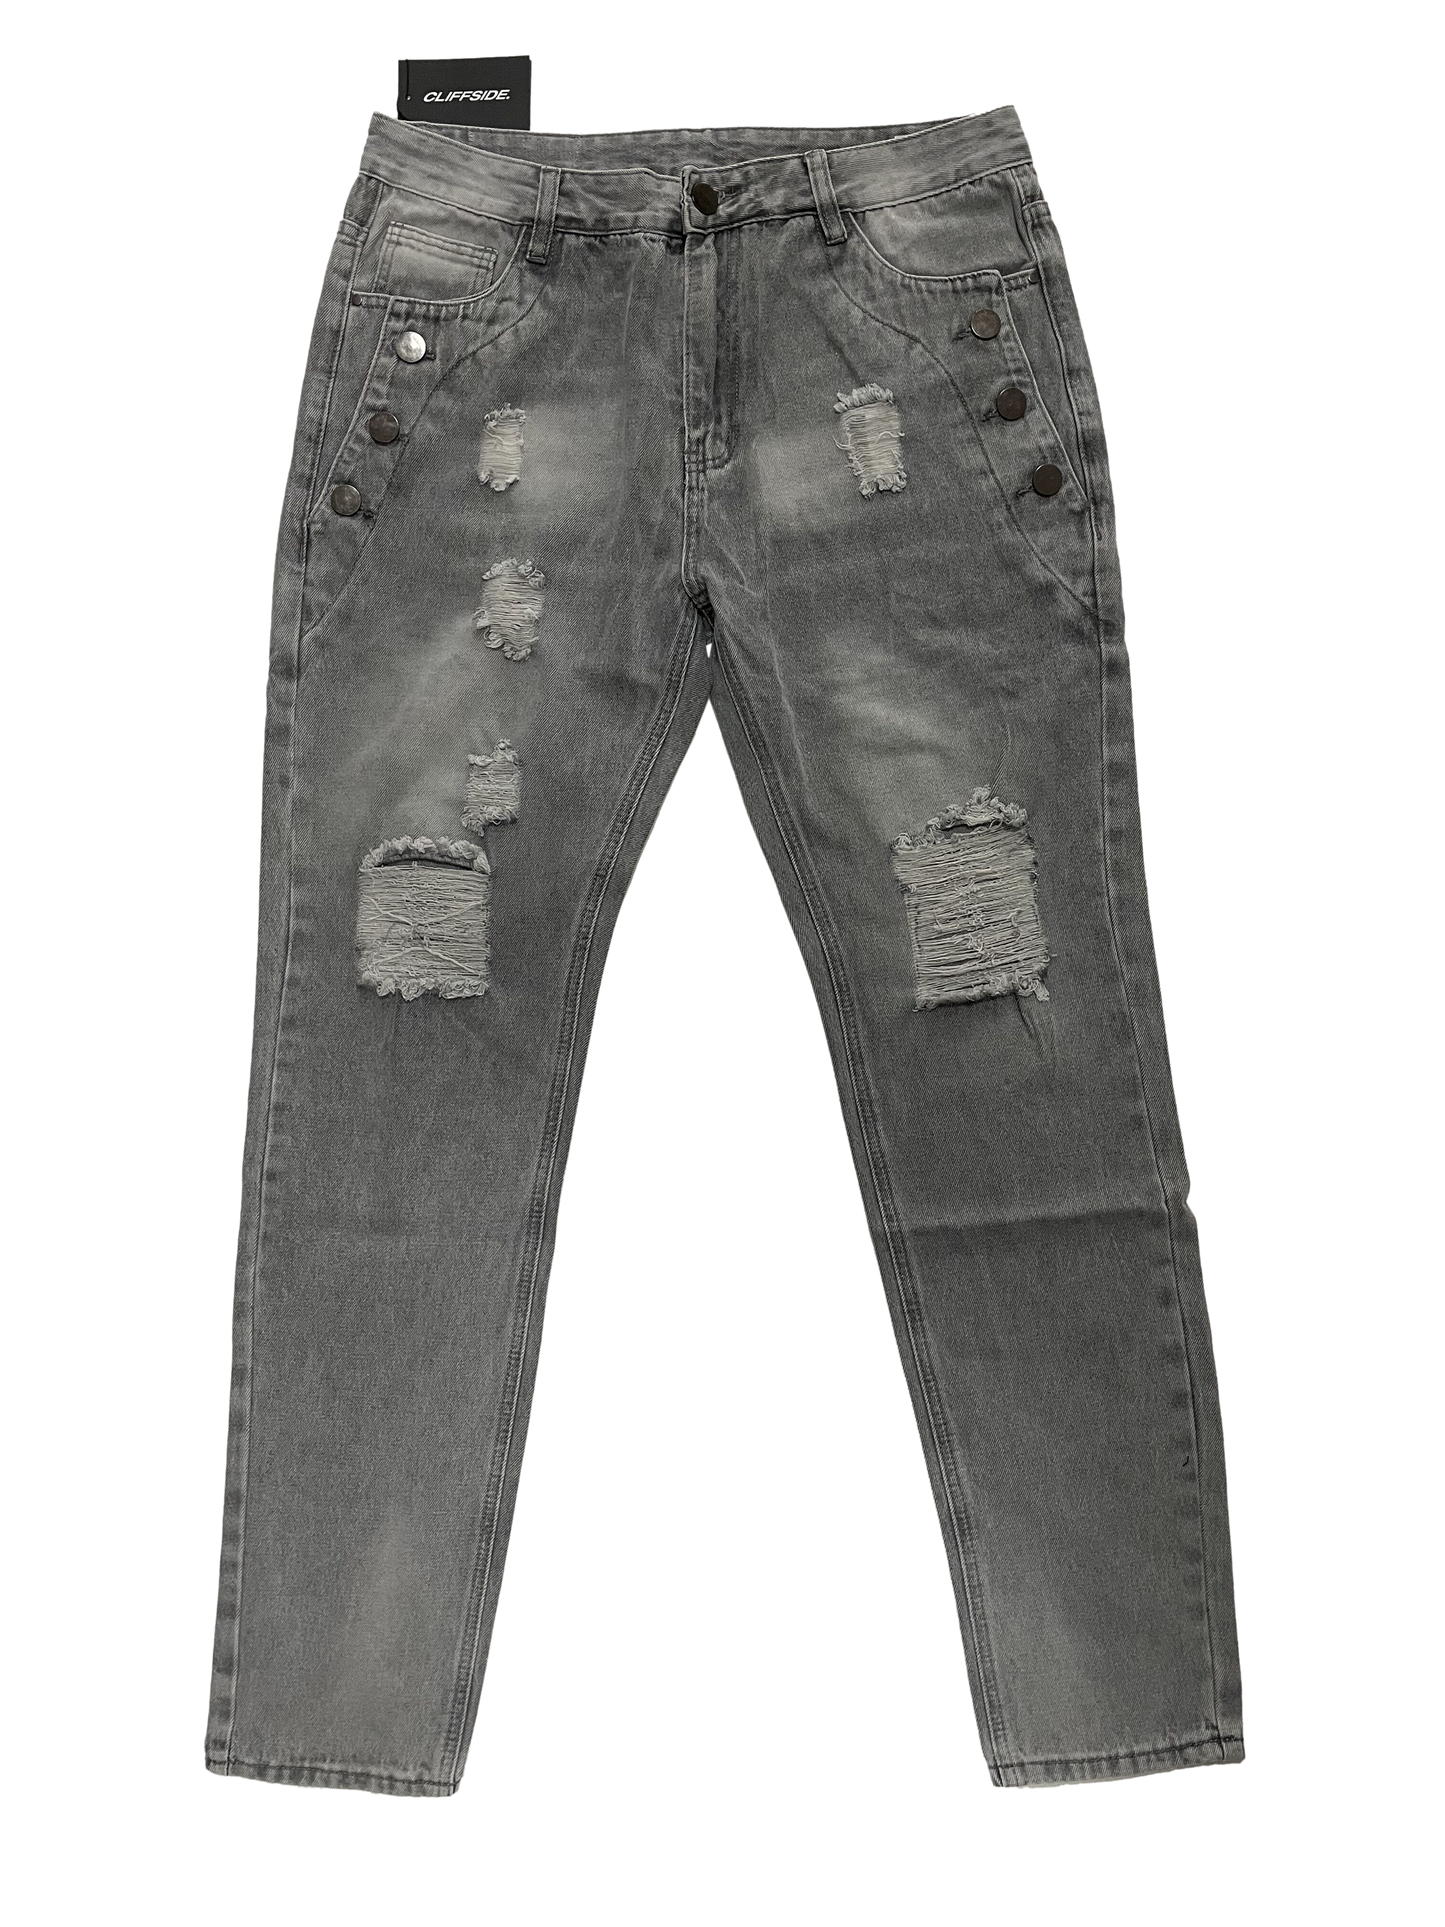 CSL "Gral" Jeans